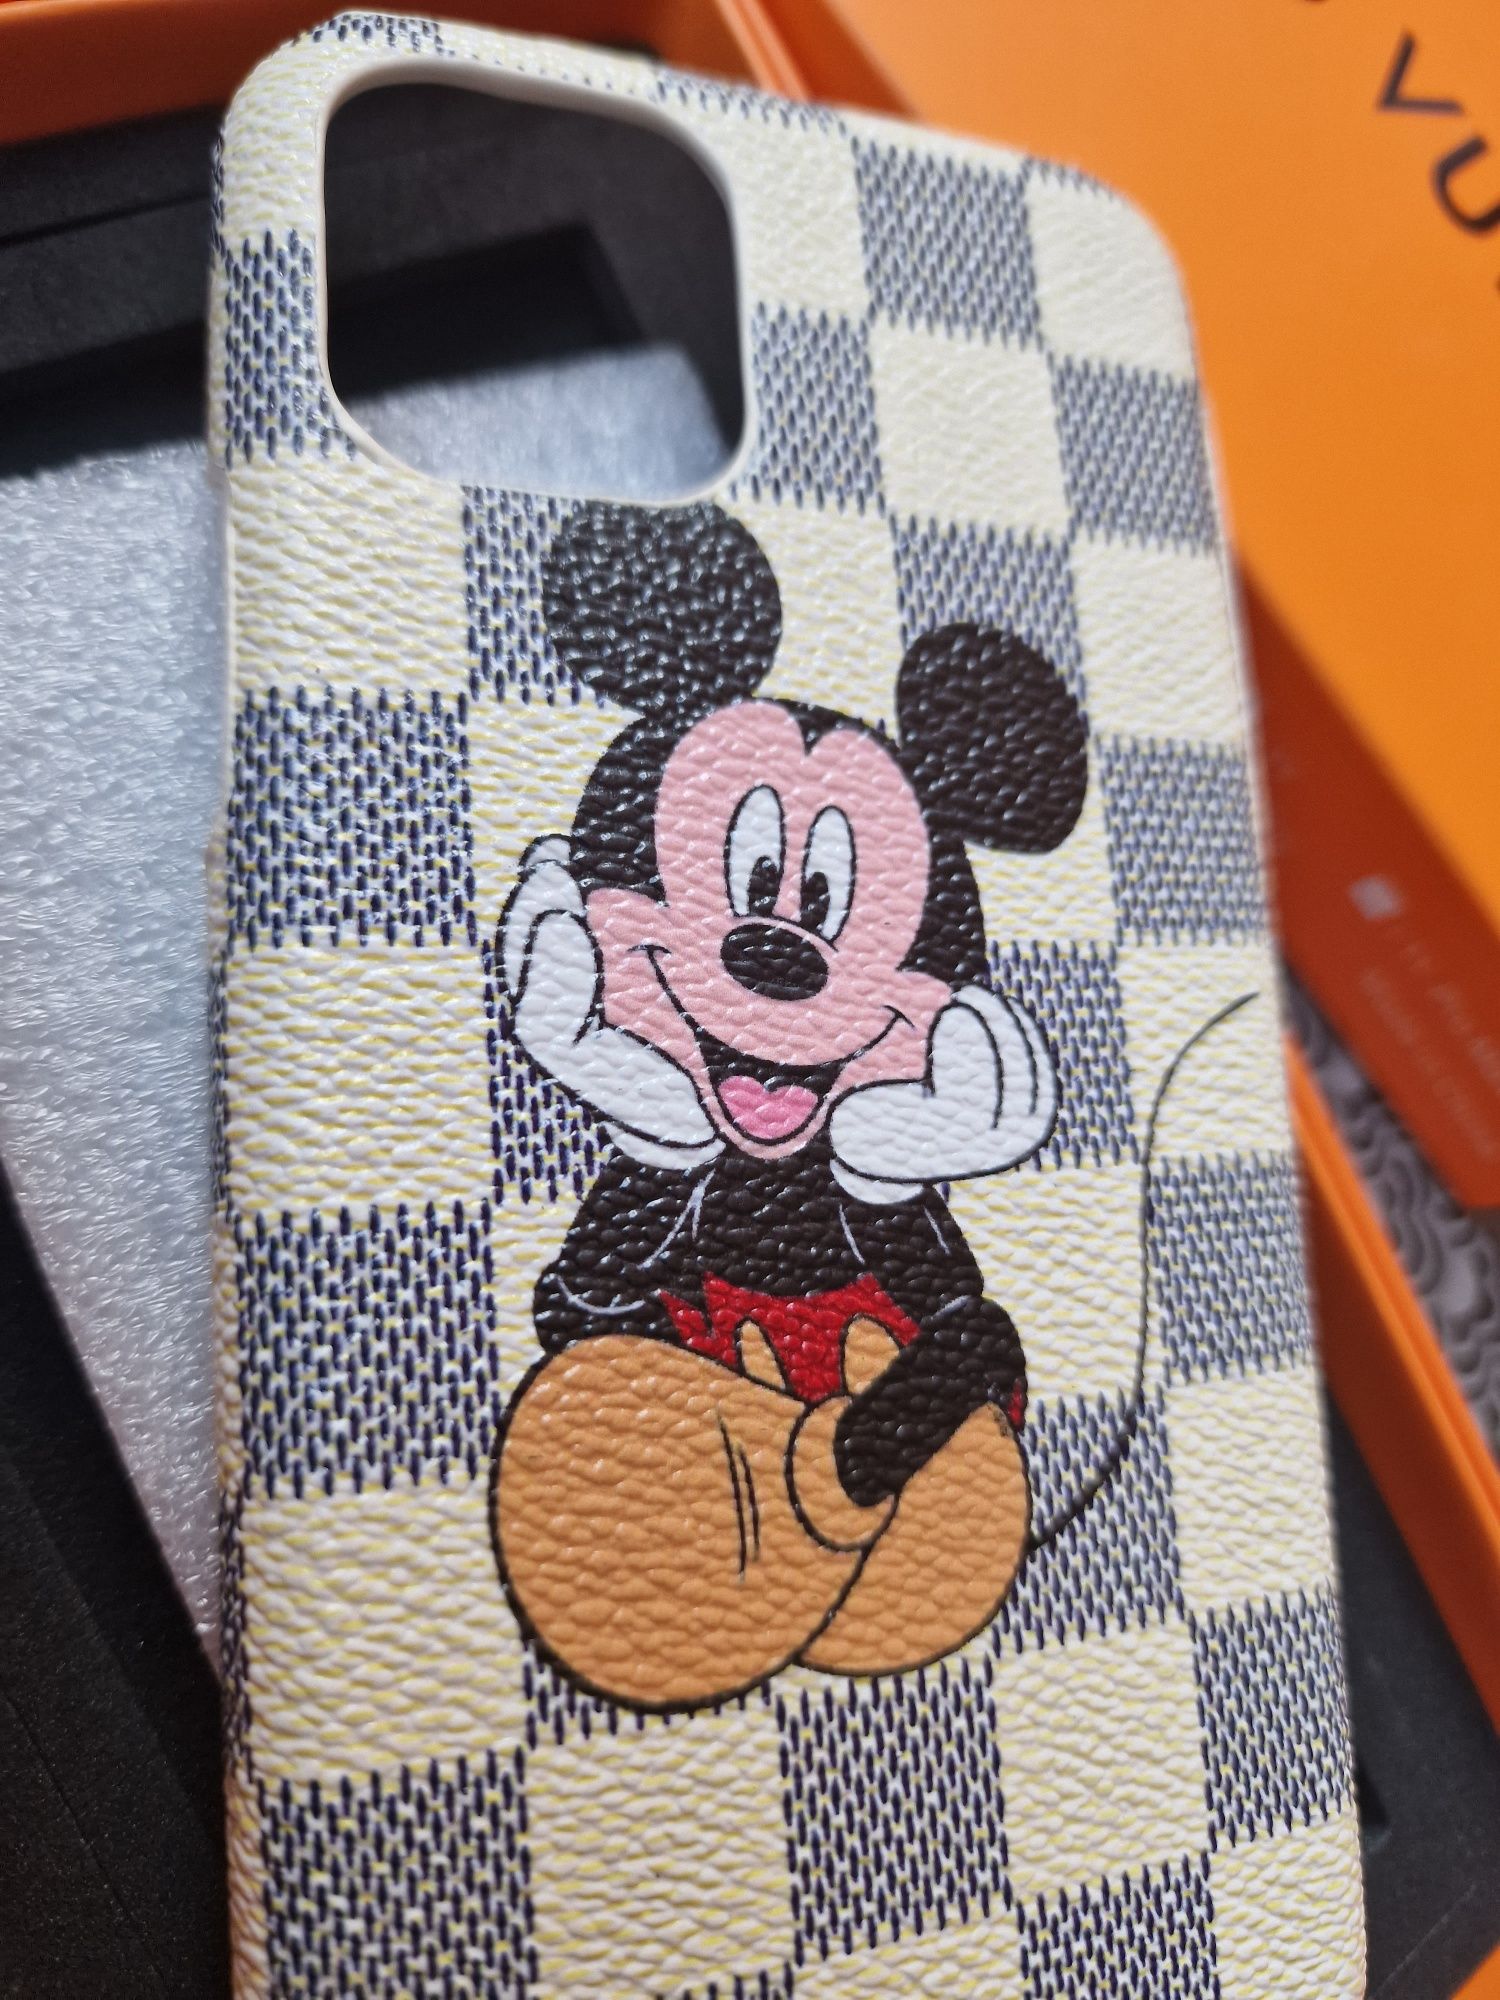 Louis Vuitton x Mickey Mouse iPhone11 pro damier azur кейс, калъф,гръб